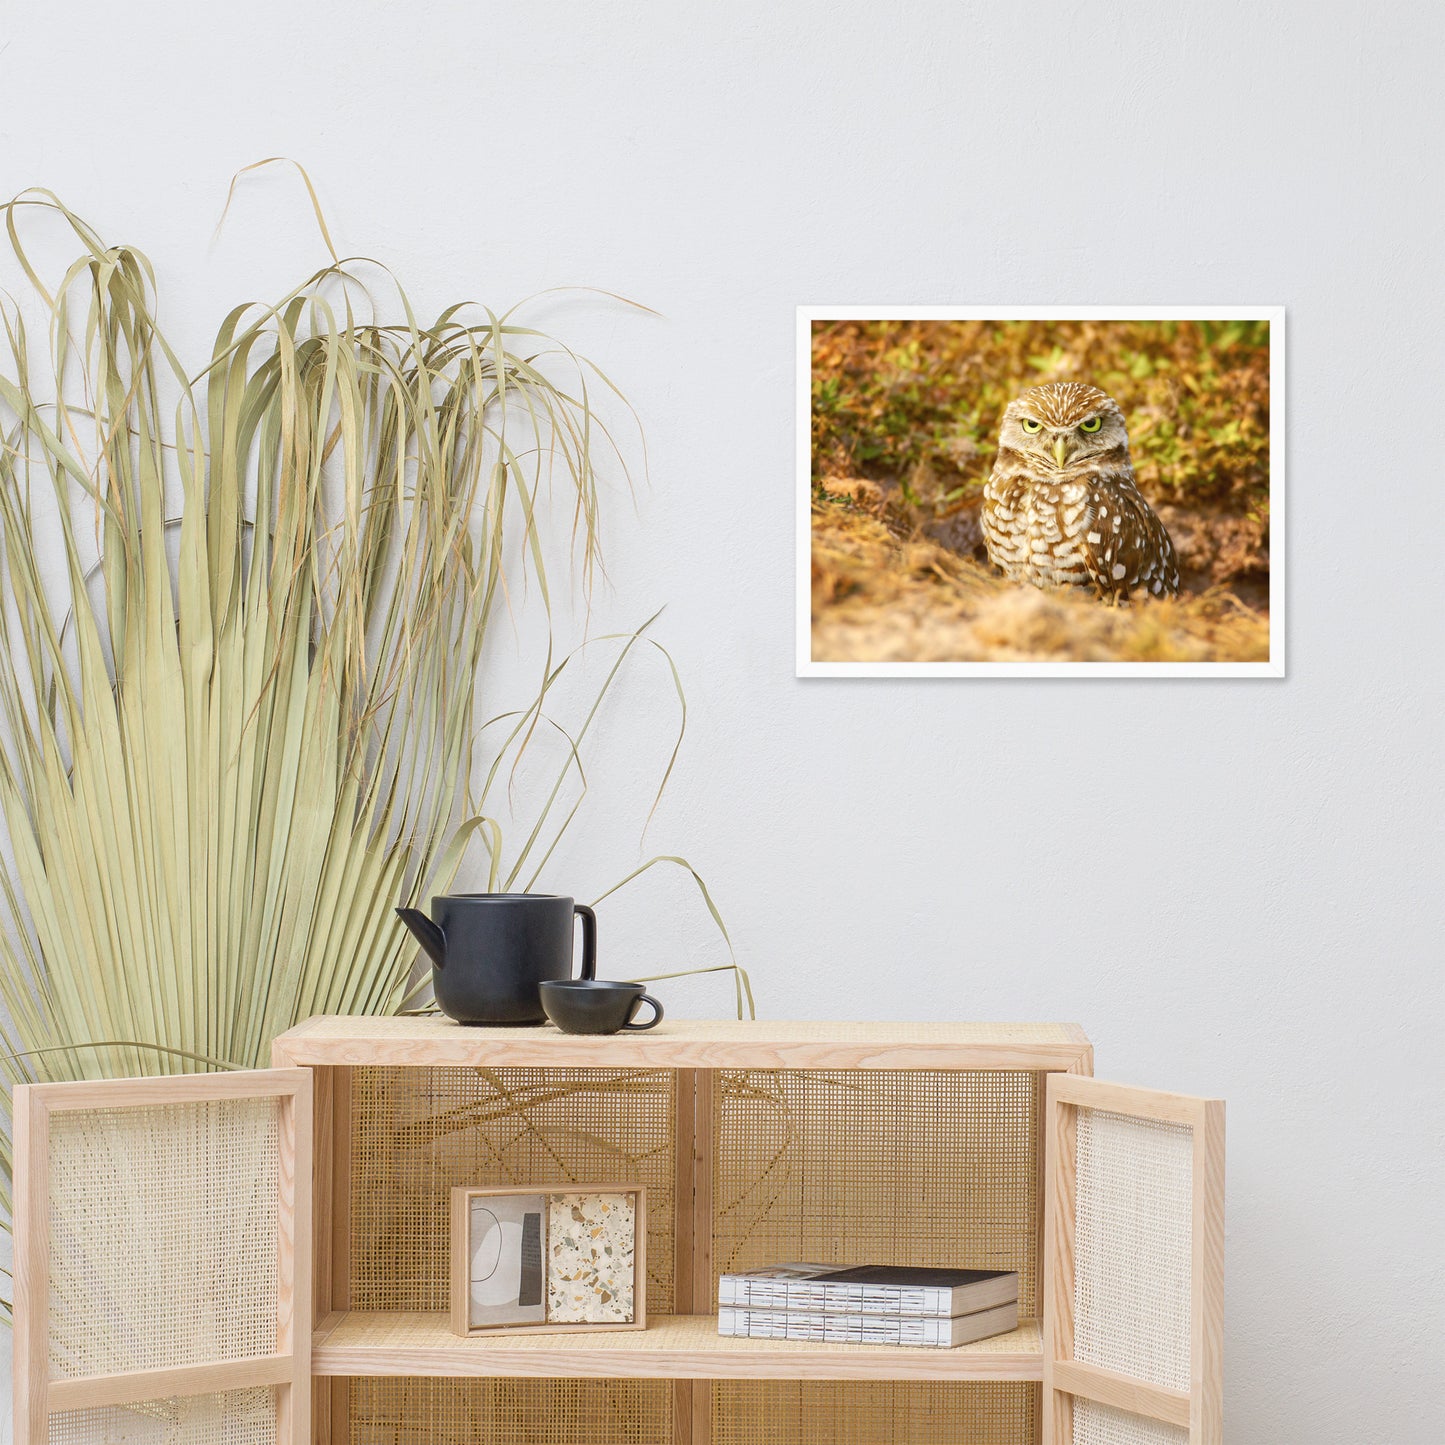 Burrowing Owl in Golden Light Wildlife Nature Photo Framed Wall Art Prints